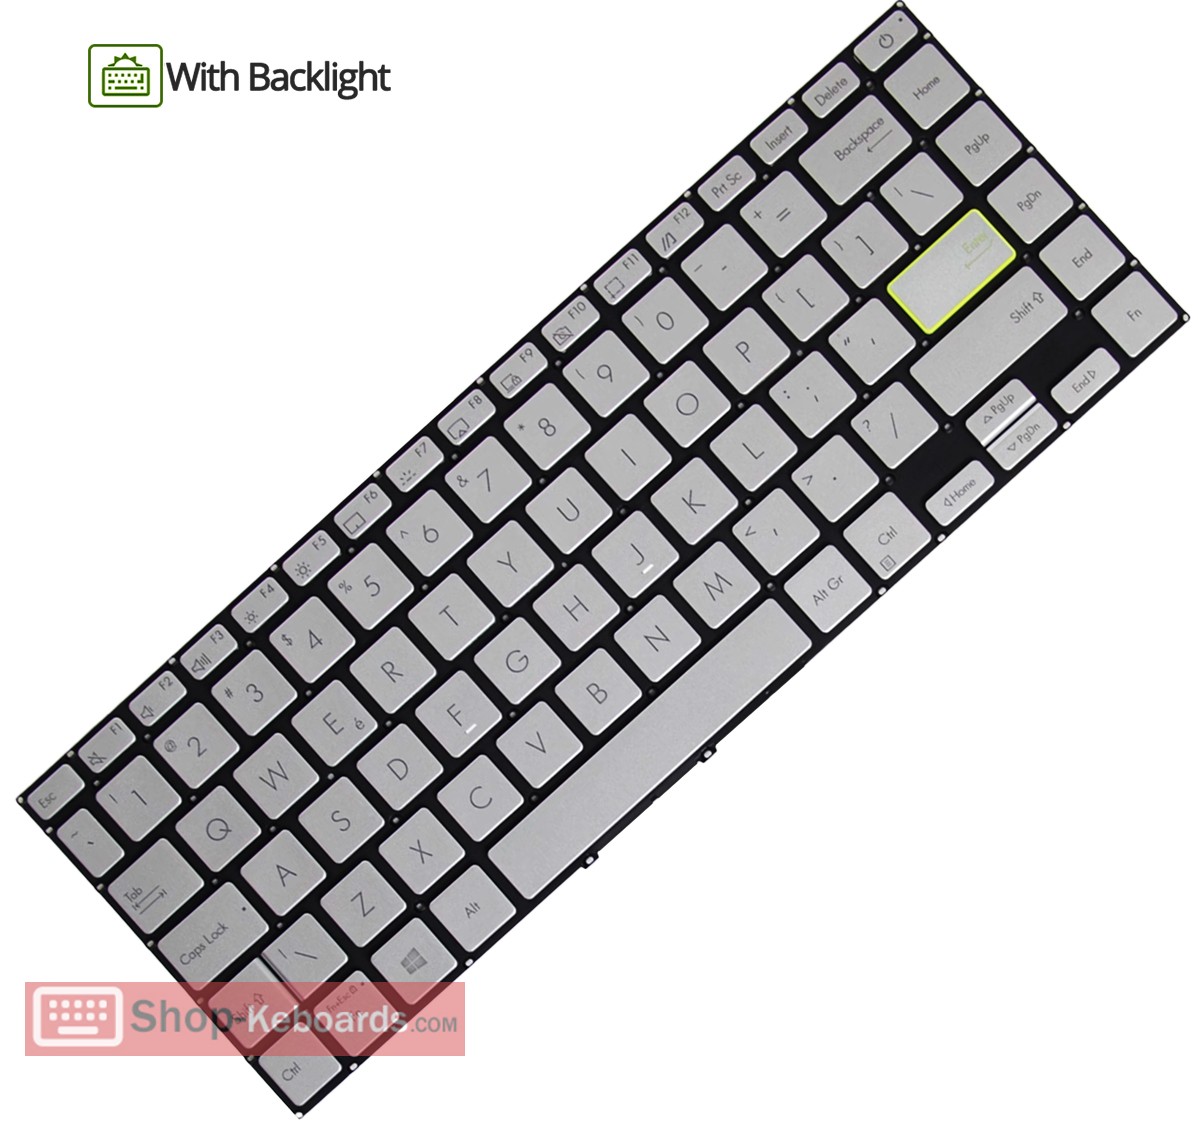 Asus E410MA-EB164TS  Keyboard replacement